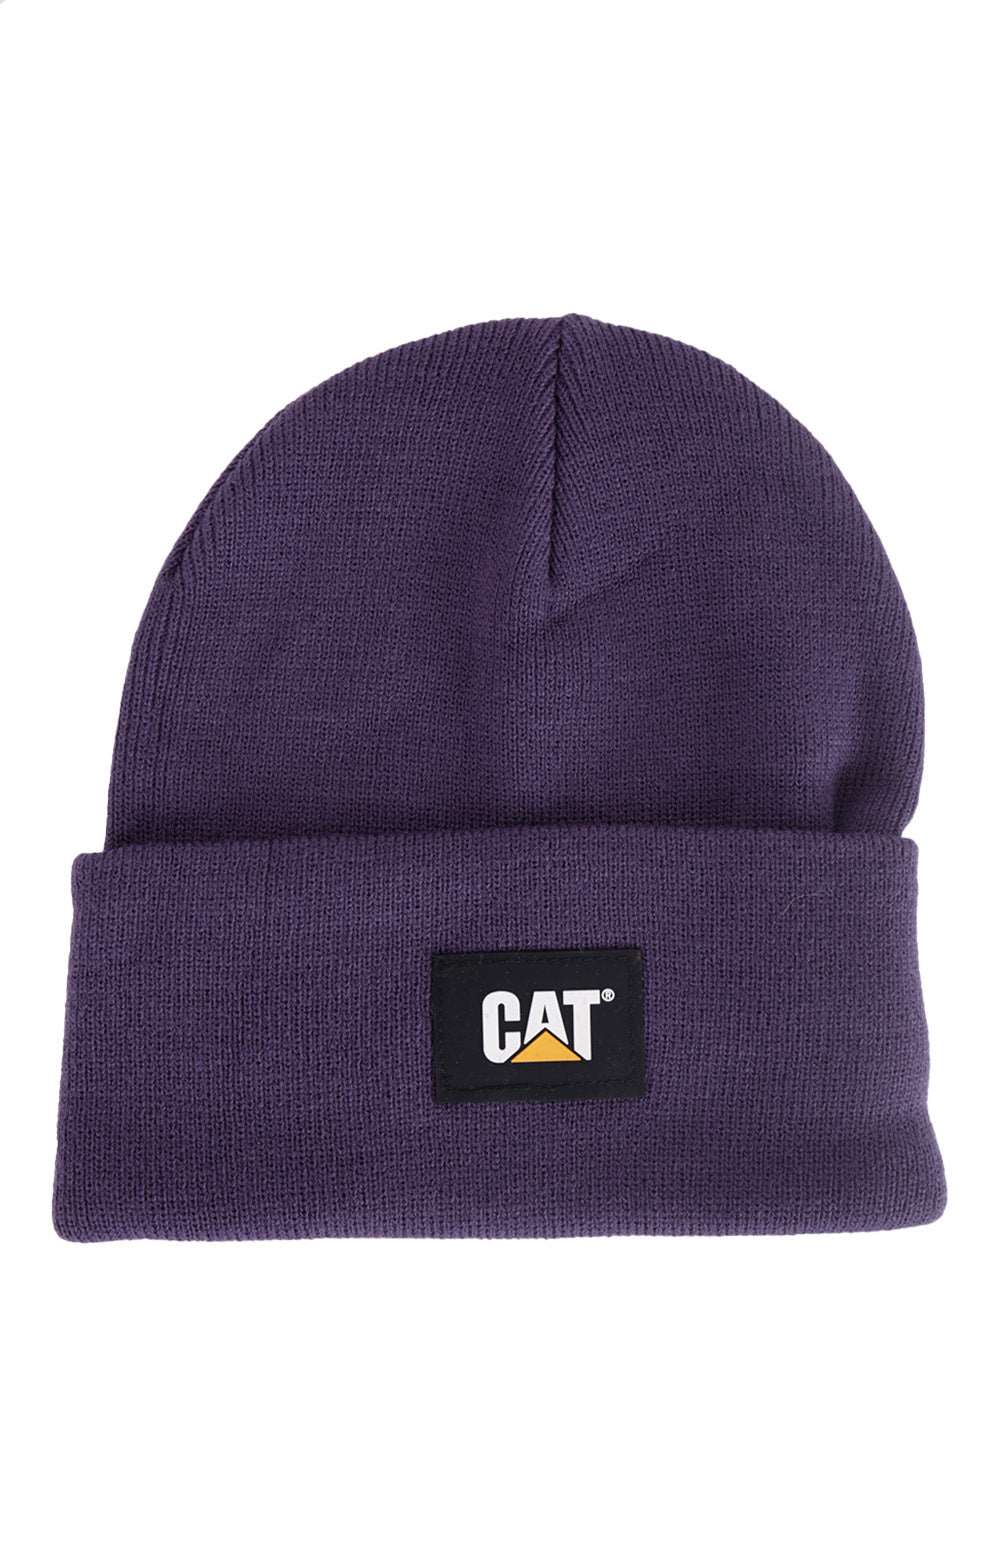 Cat Label Cuff Beanie - Purple Velvet